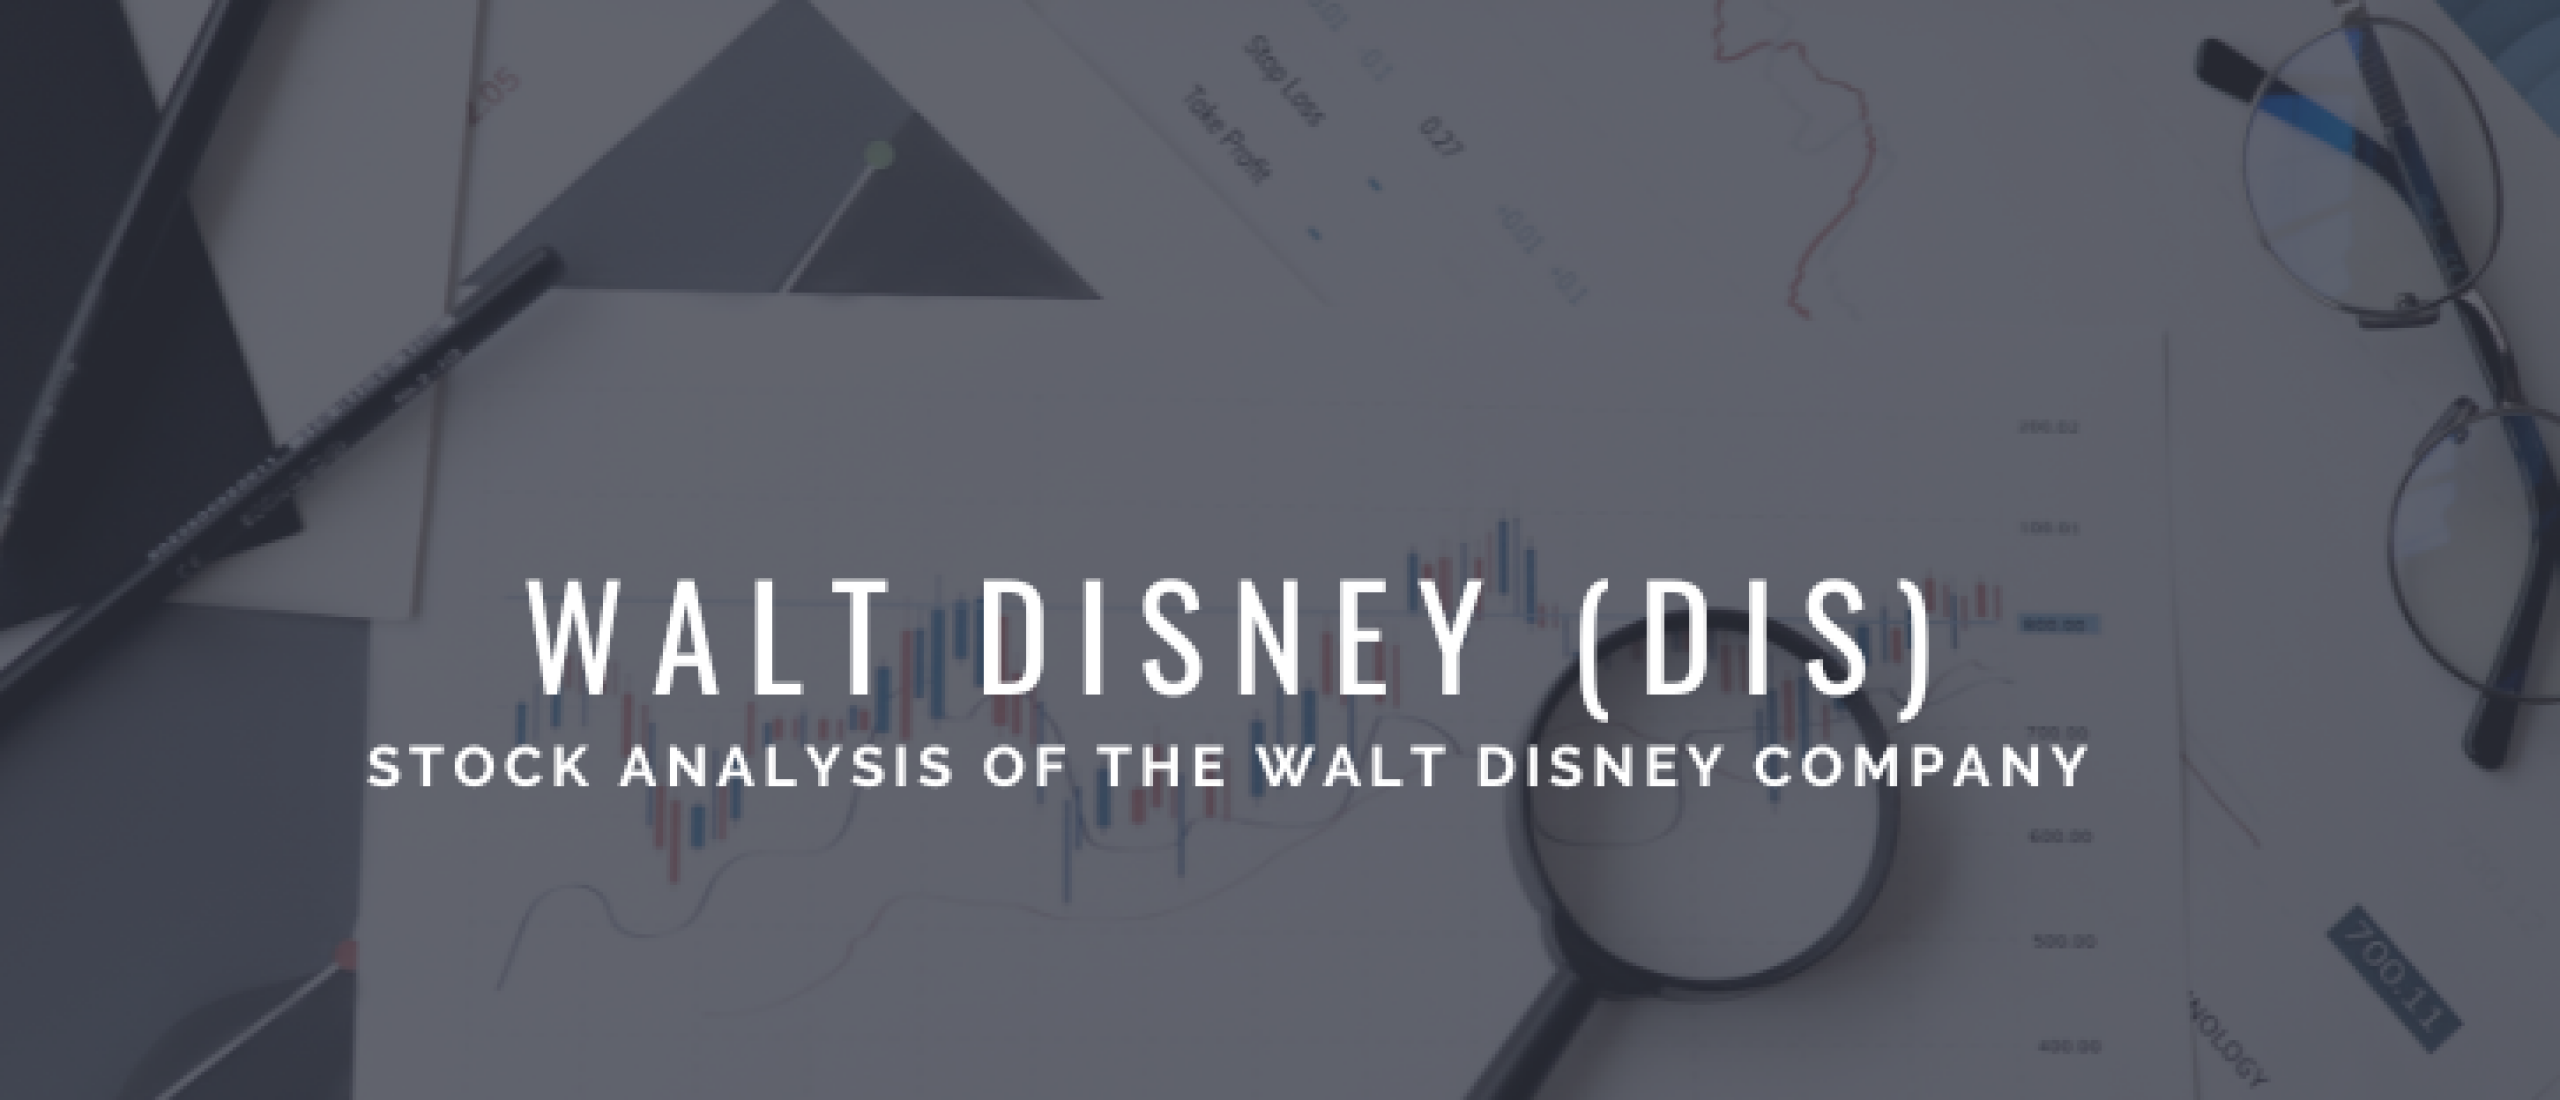 Walt Disney (DIS) Stock Analysis: Price Target, Risks, Strategy & More